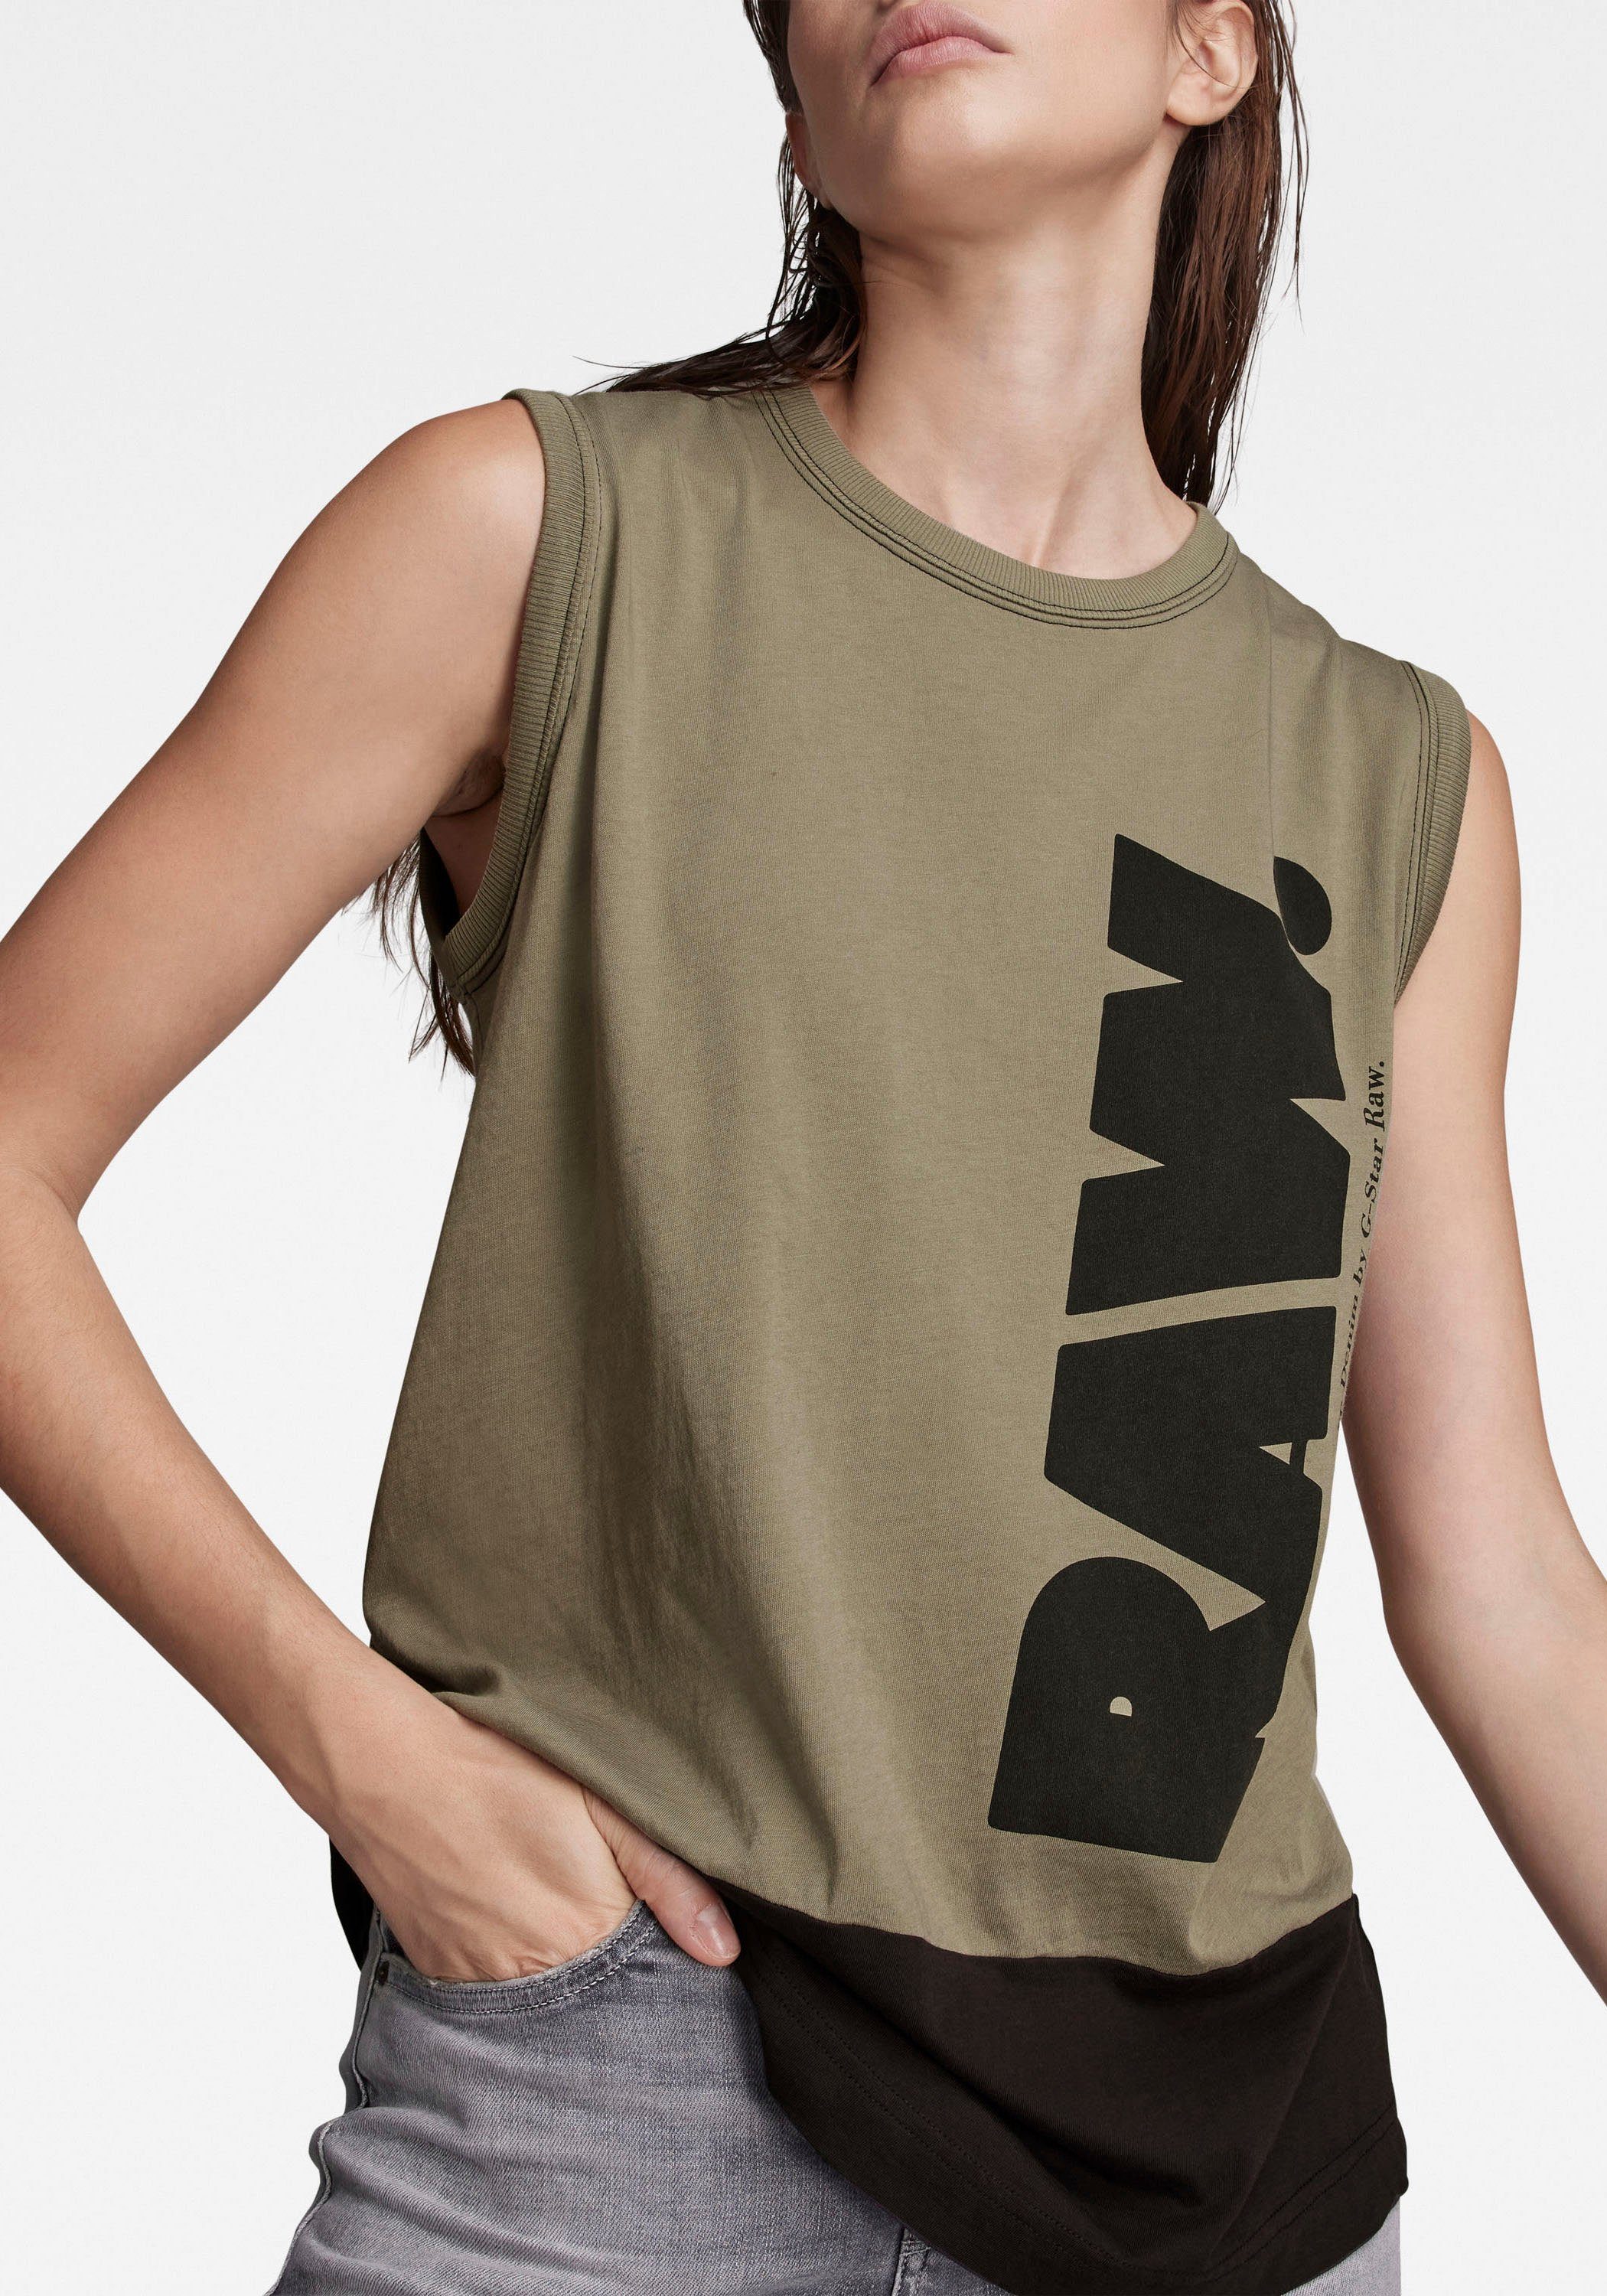 Lash black Grafikdruck to T-Shirt block RAW G-Star mti T-Shirt vorne tank (oliv/schwarz) shamrock/dk Logo color